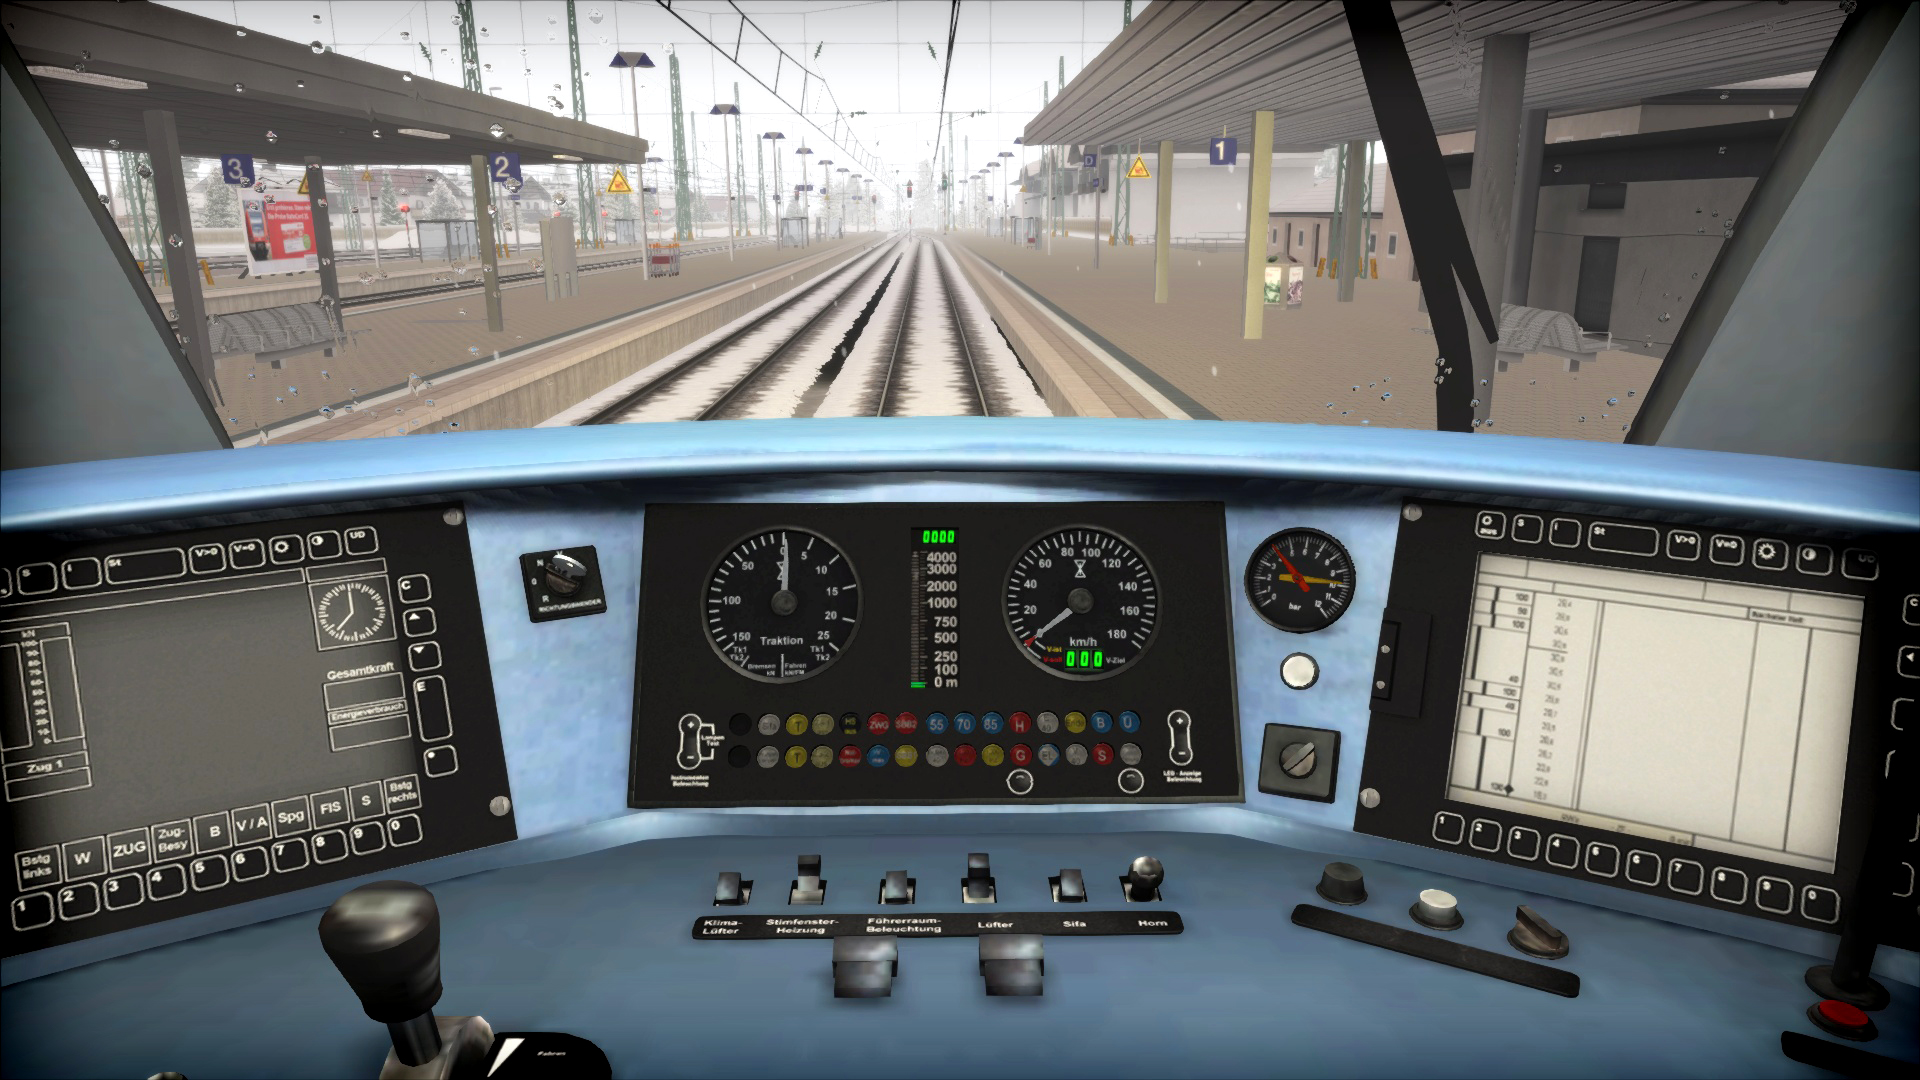 Train Simulator: Munich - Garmisch-Partenkirchen Route Add-On screenshot